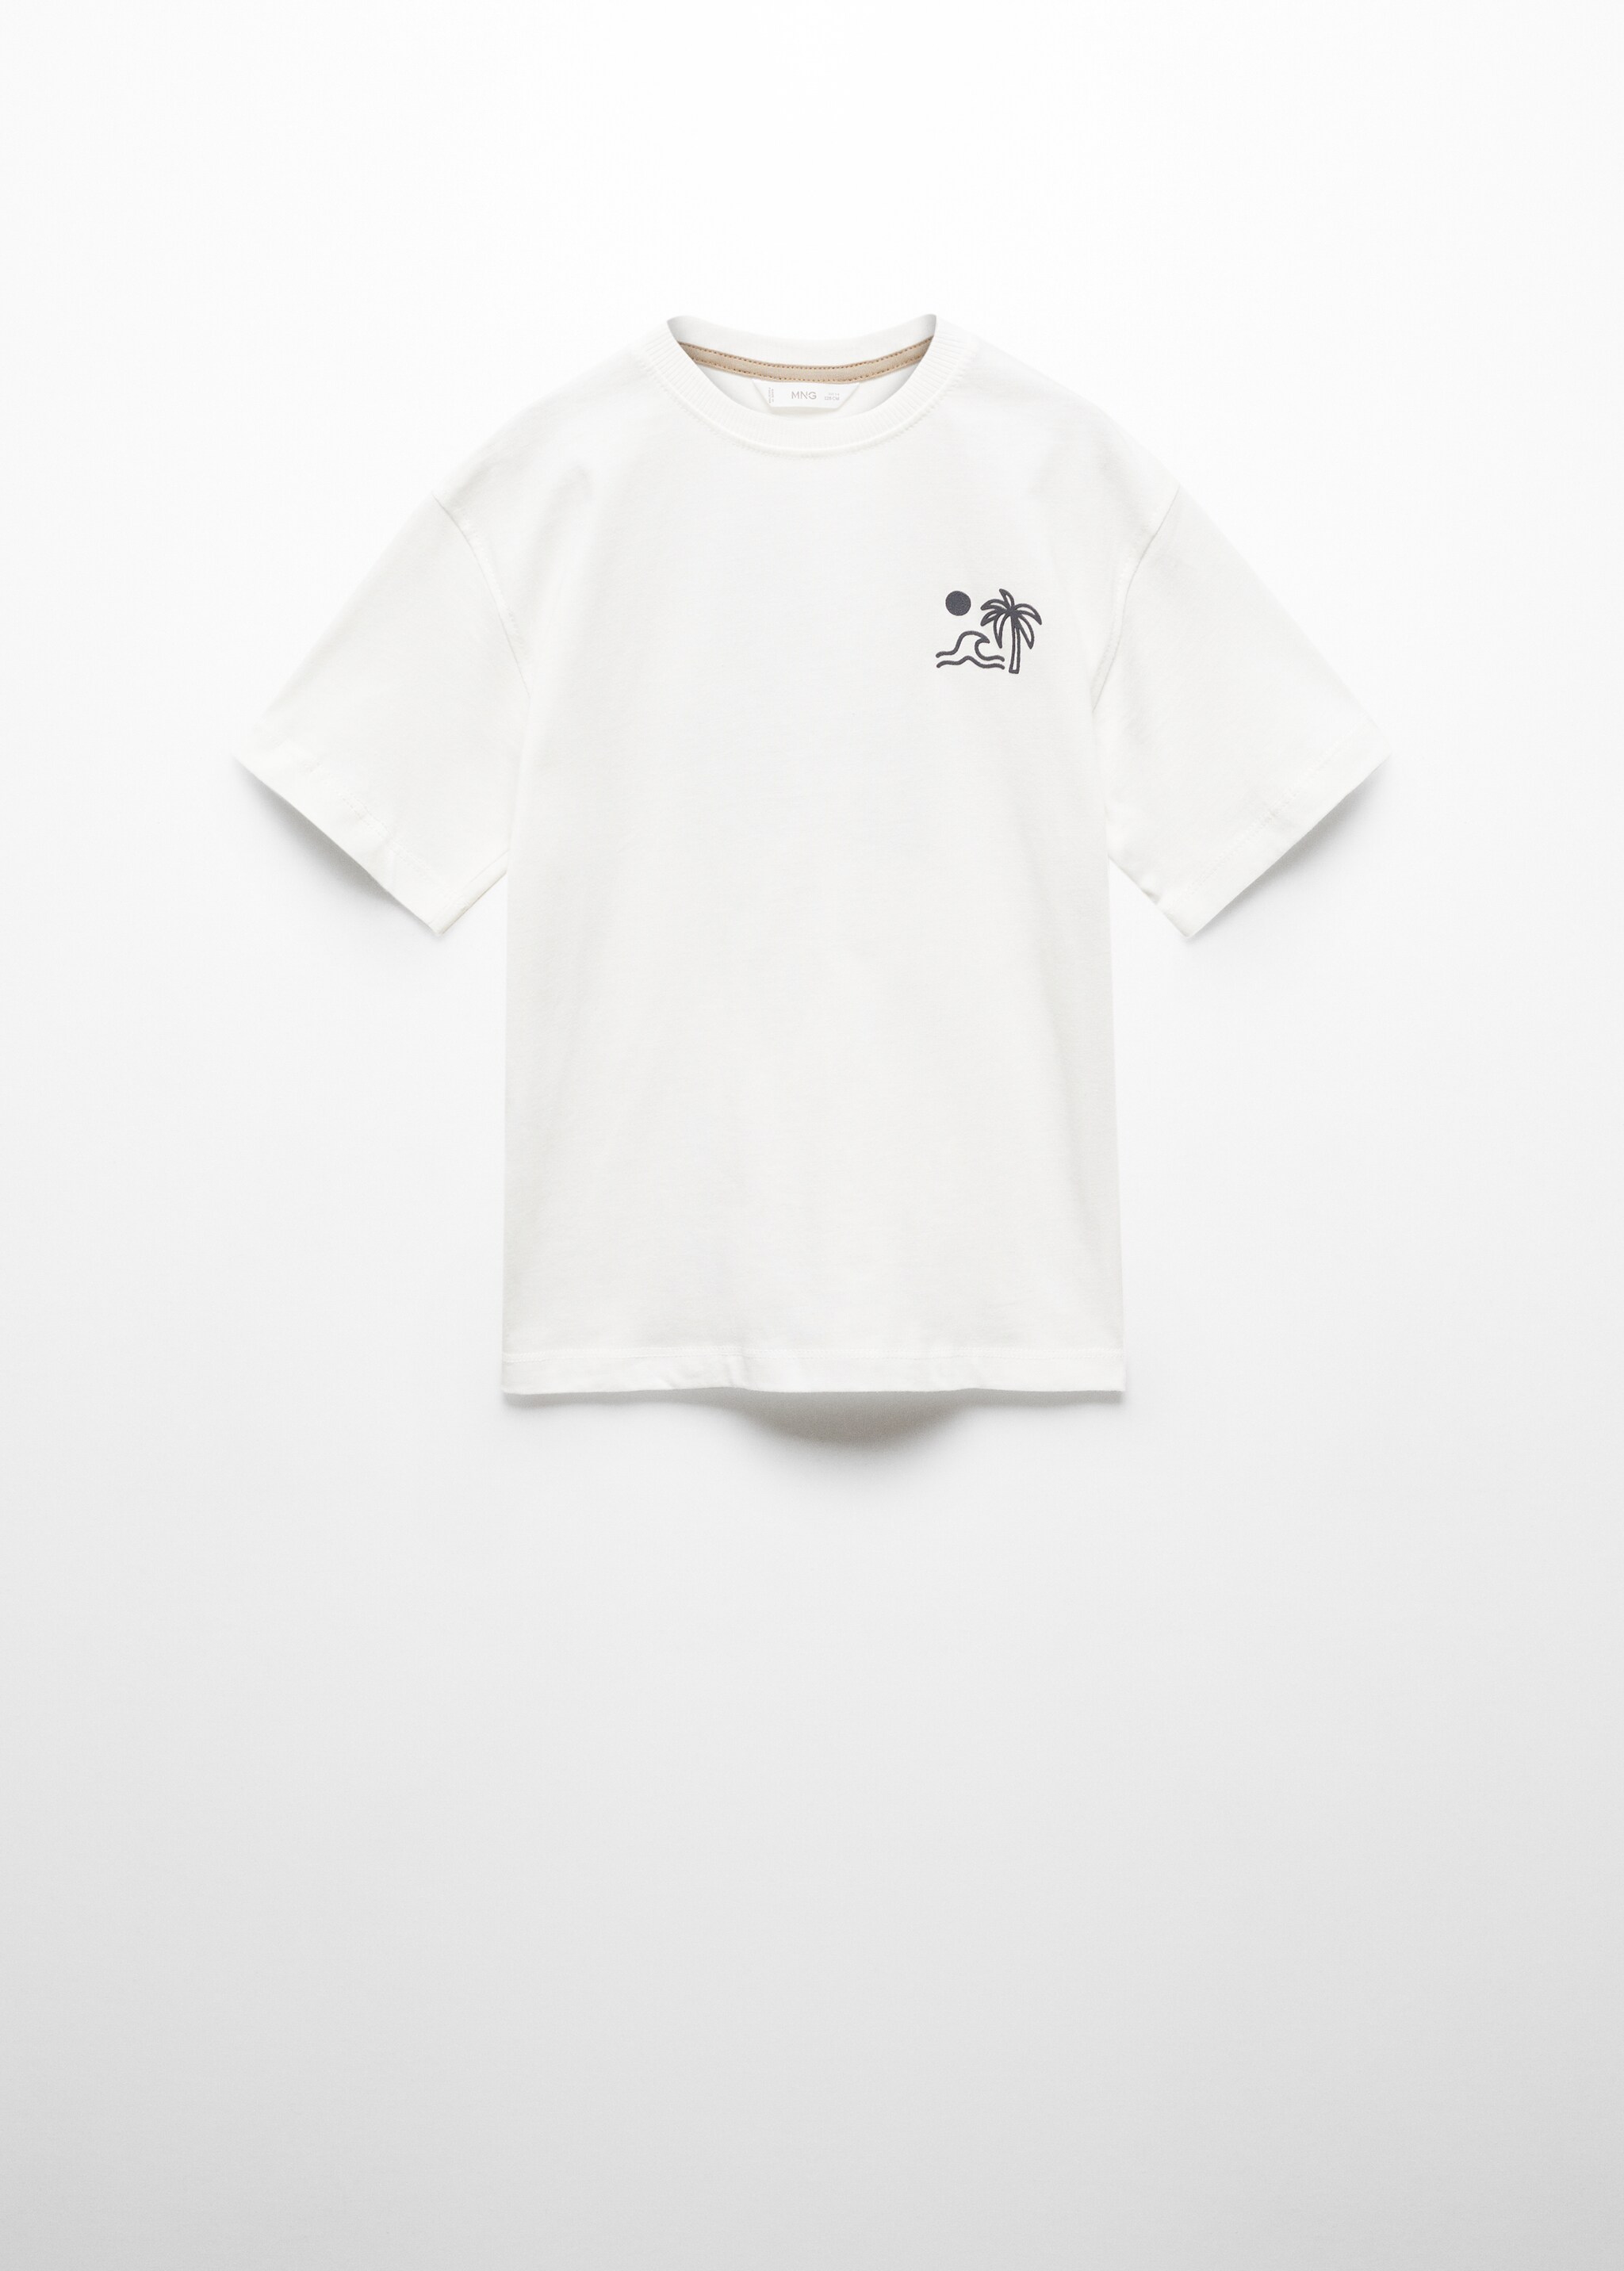 Camiseta estampada manga corta - Artículo sin modelo